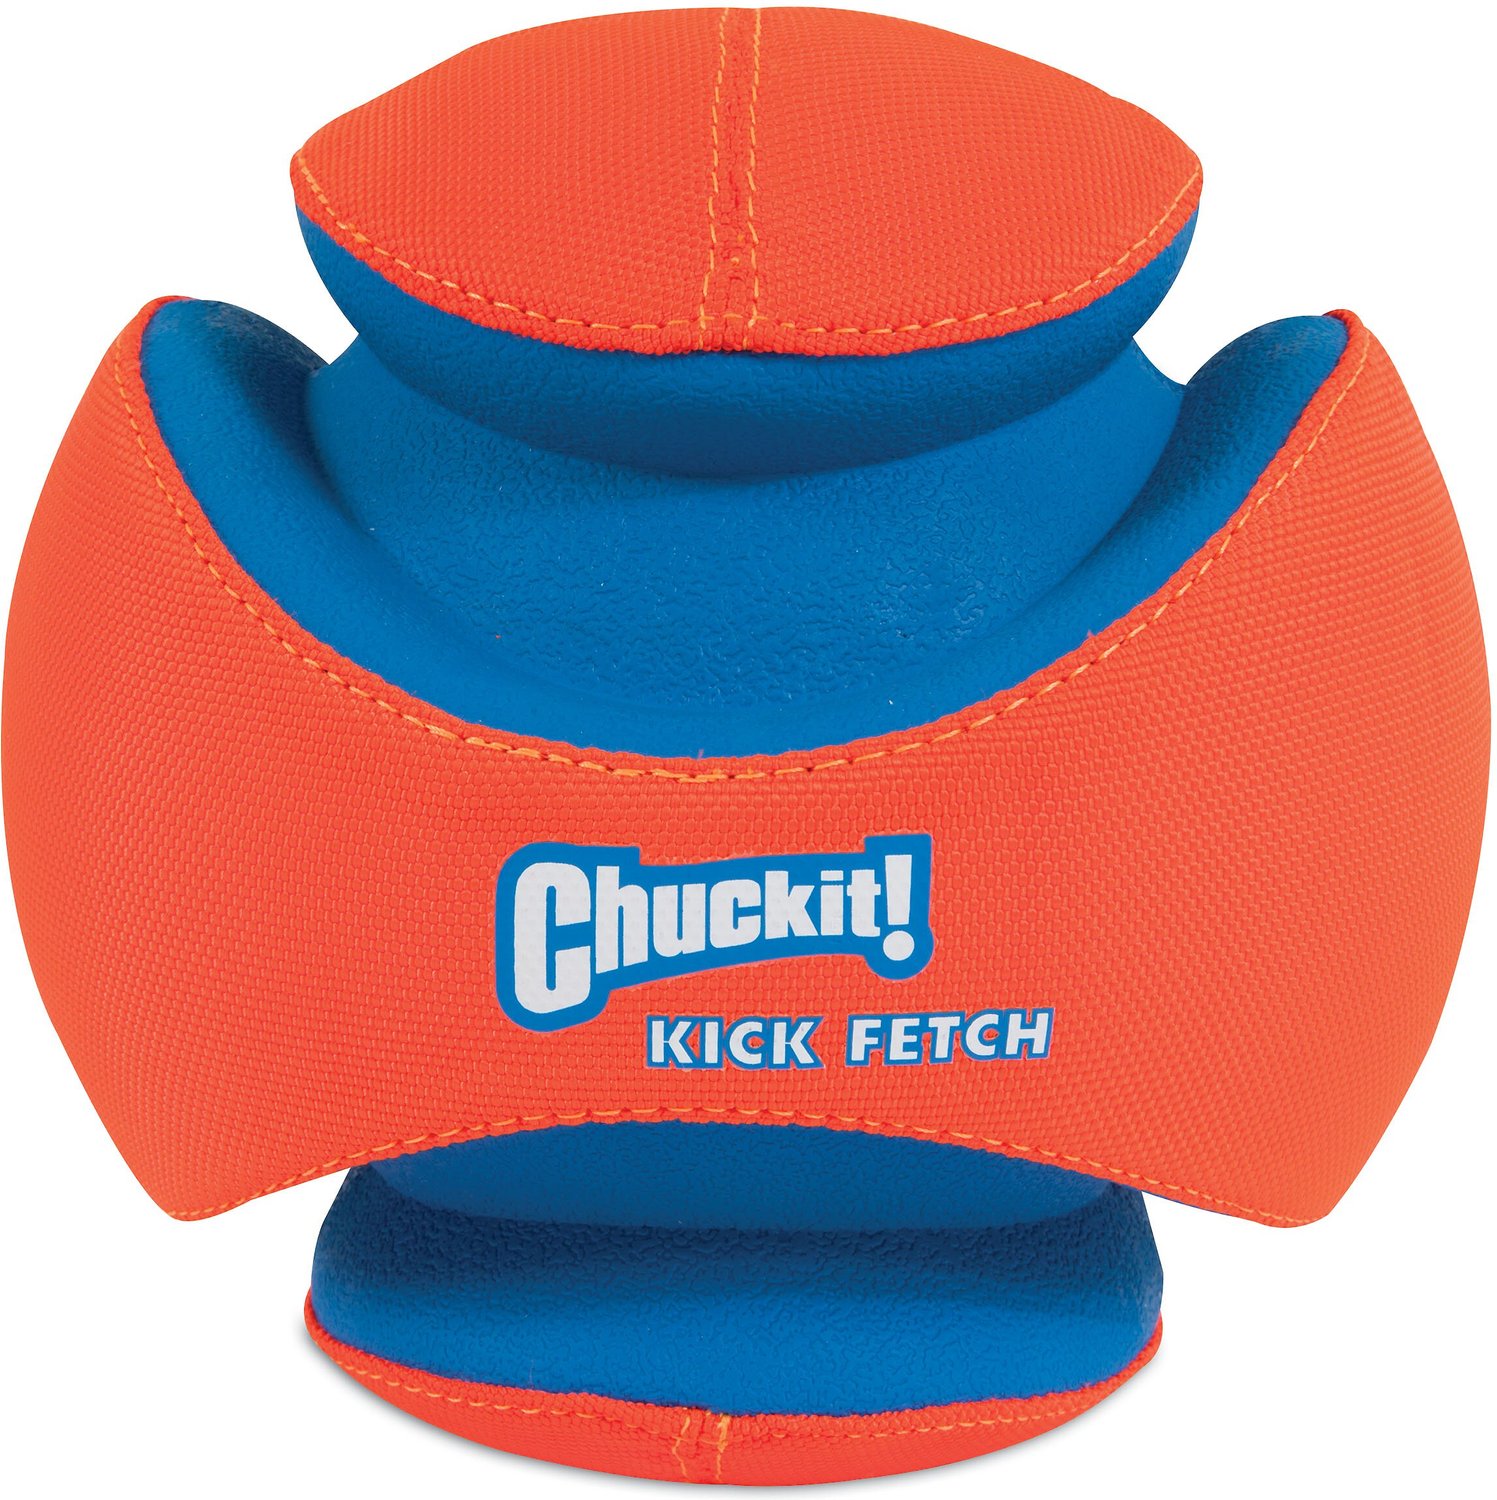 Chuckit Dog Kick fetch durable Canvas Toy Ball will not deflate large купить.